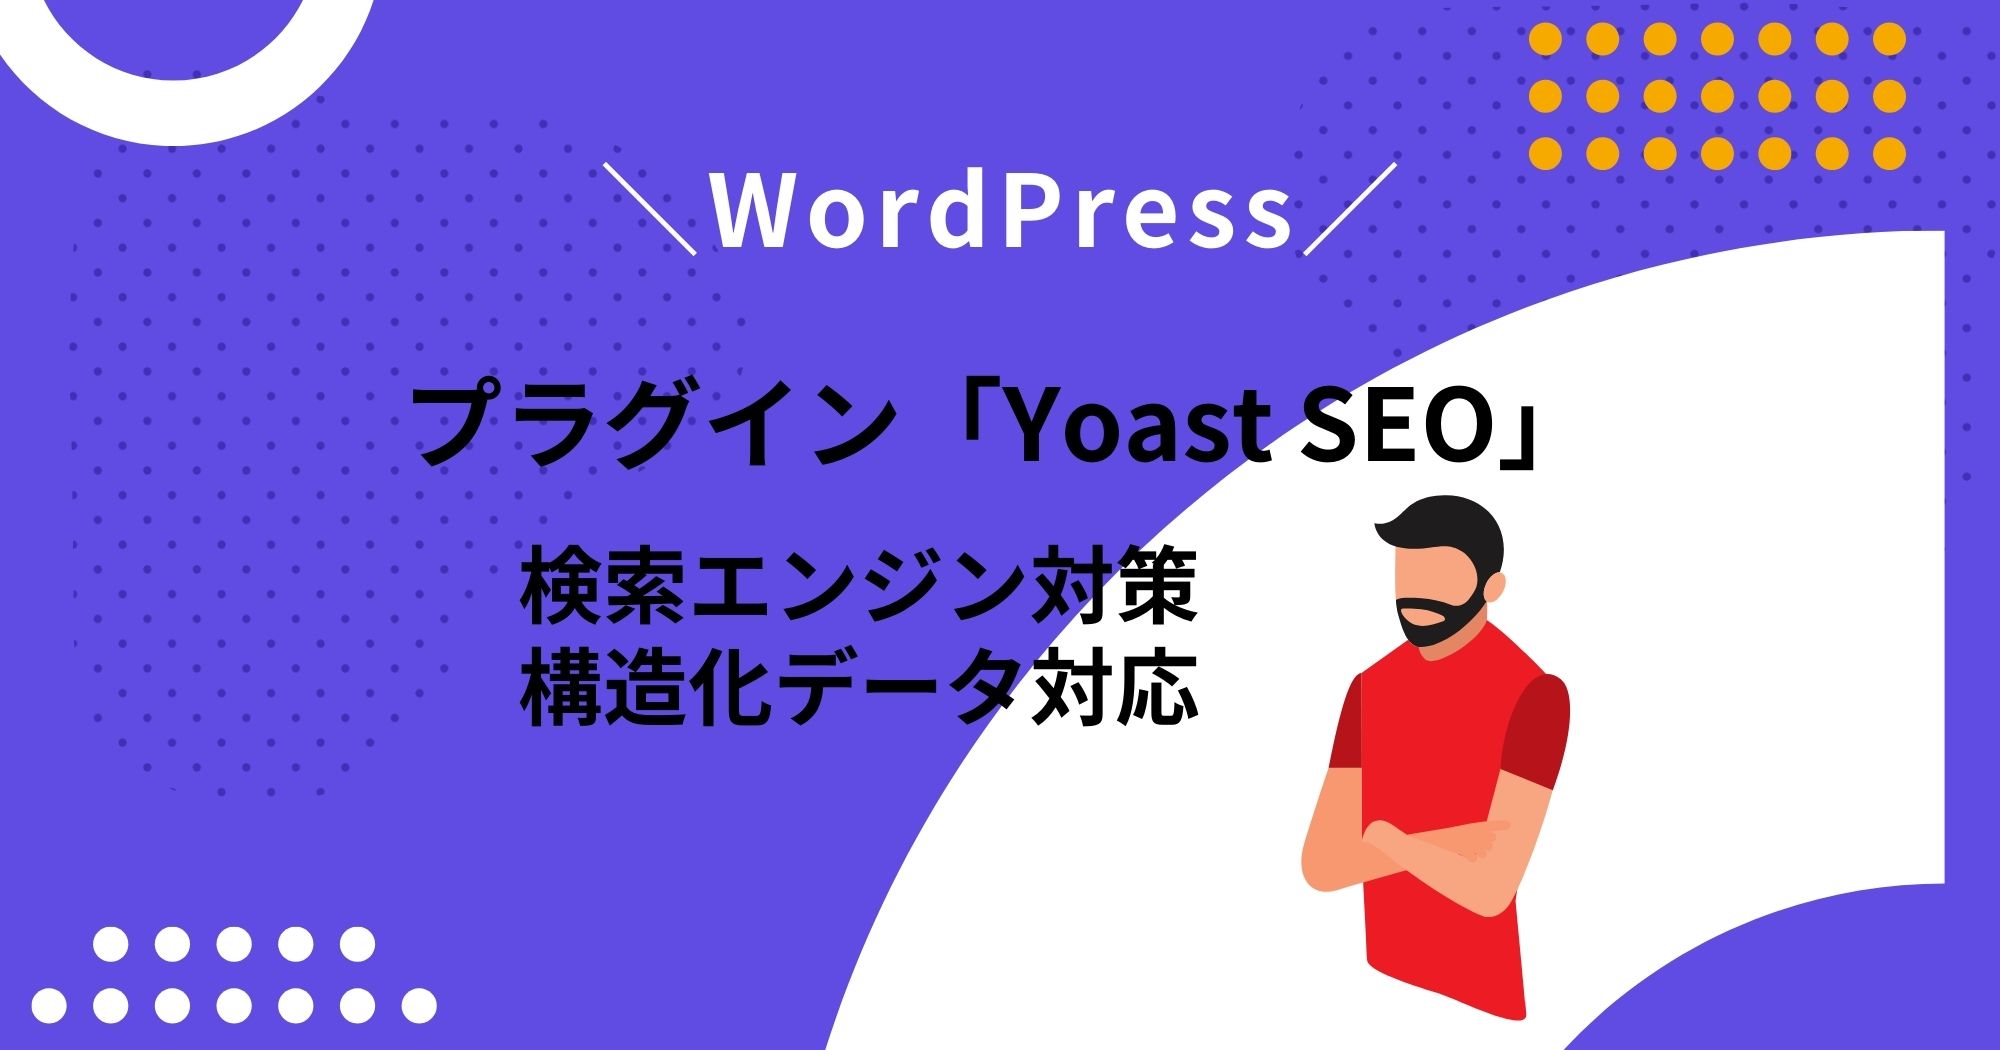 WordPressプラグイン「Yoast SEO」で検索エンジン対策と構造化データへ対応